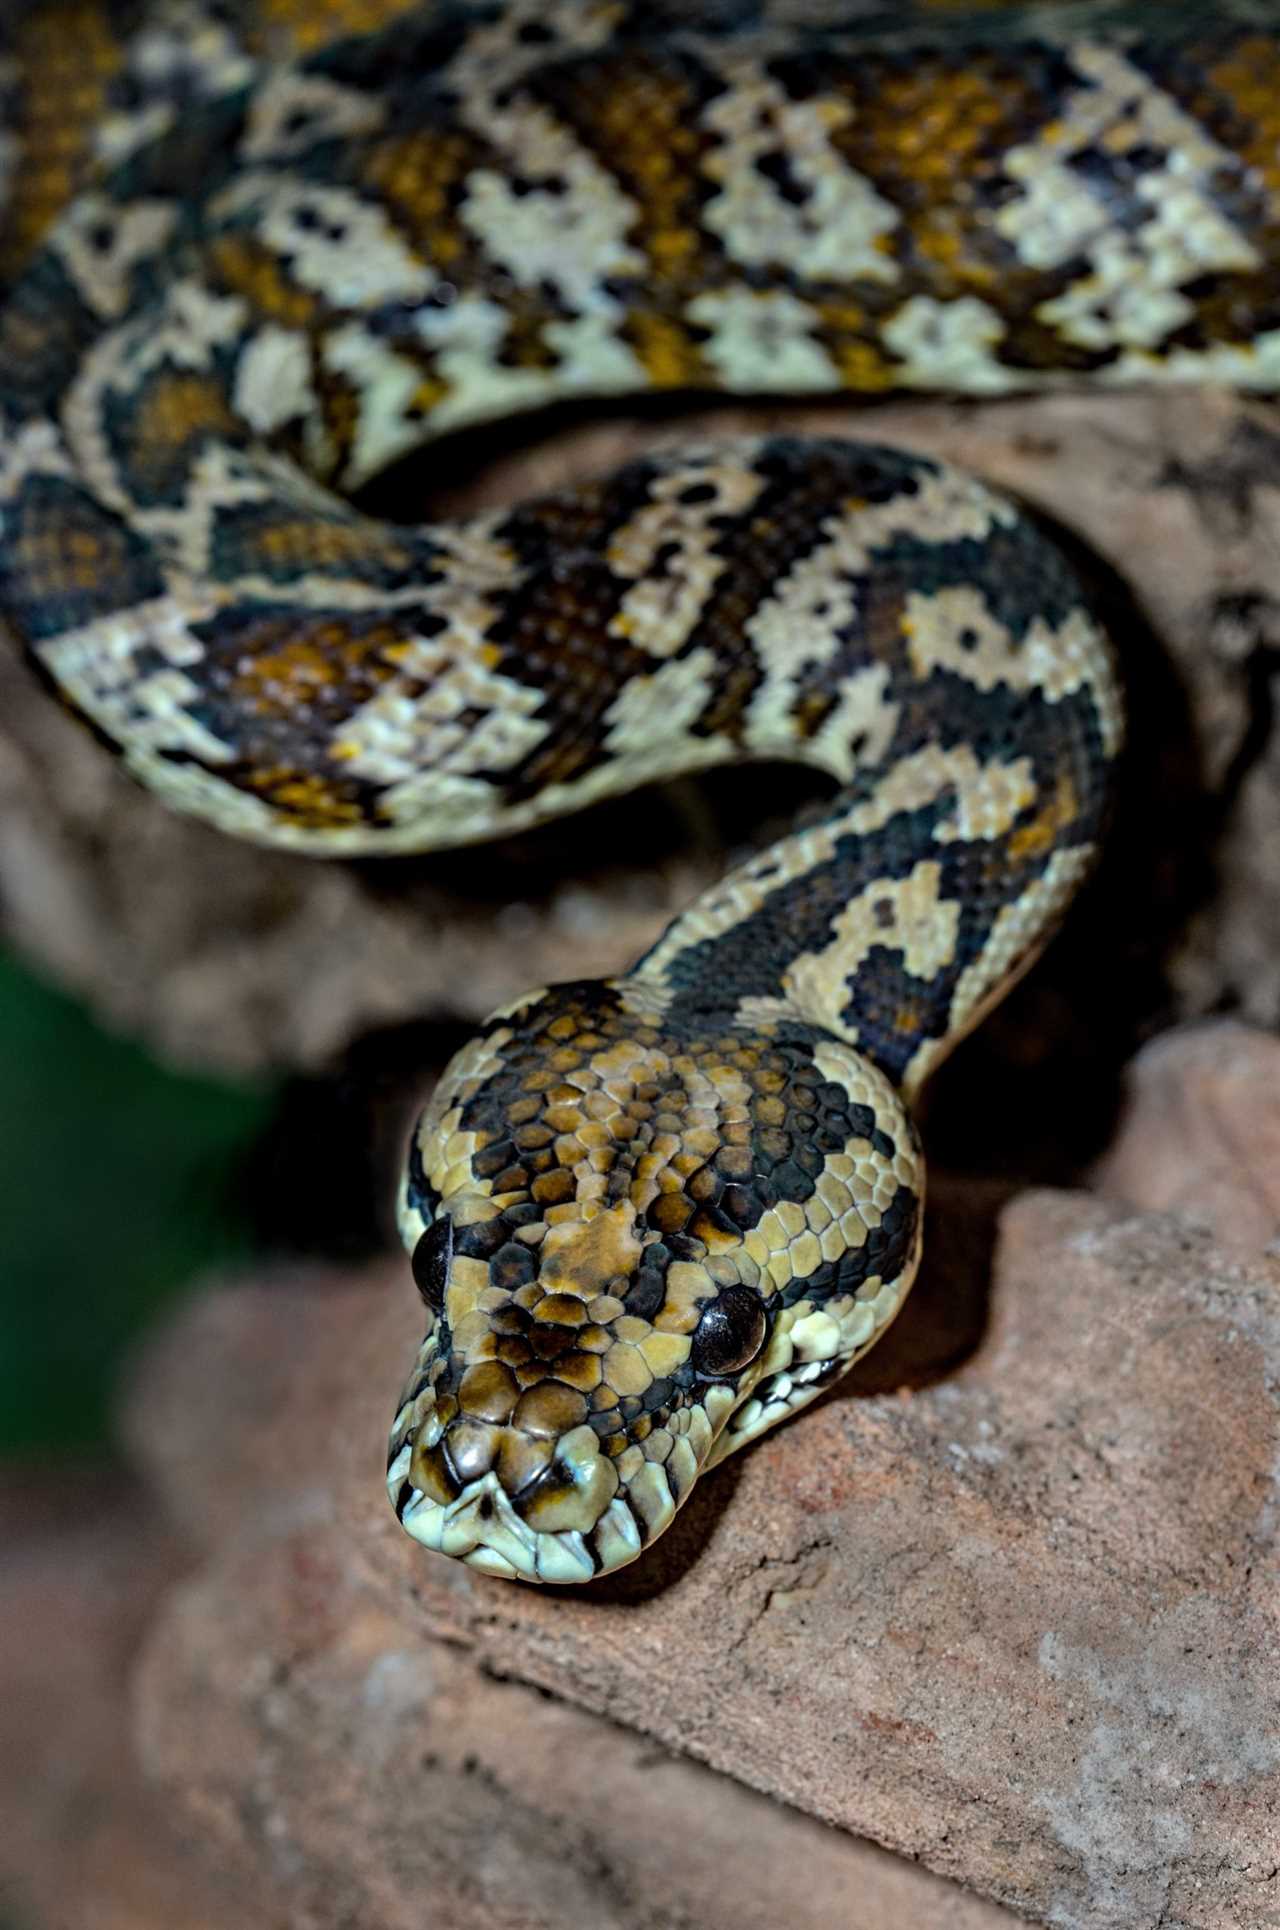 Encountering Carpet Pythons